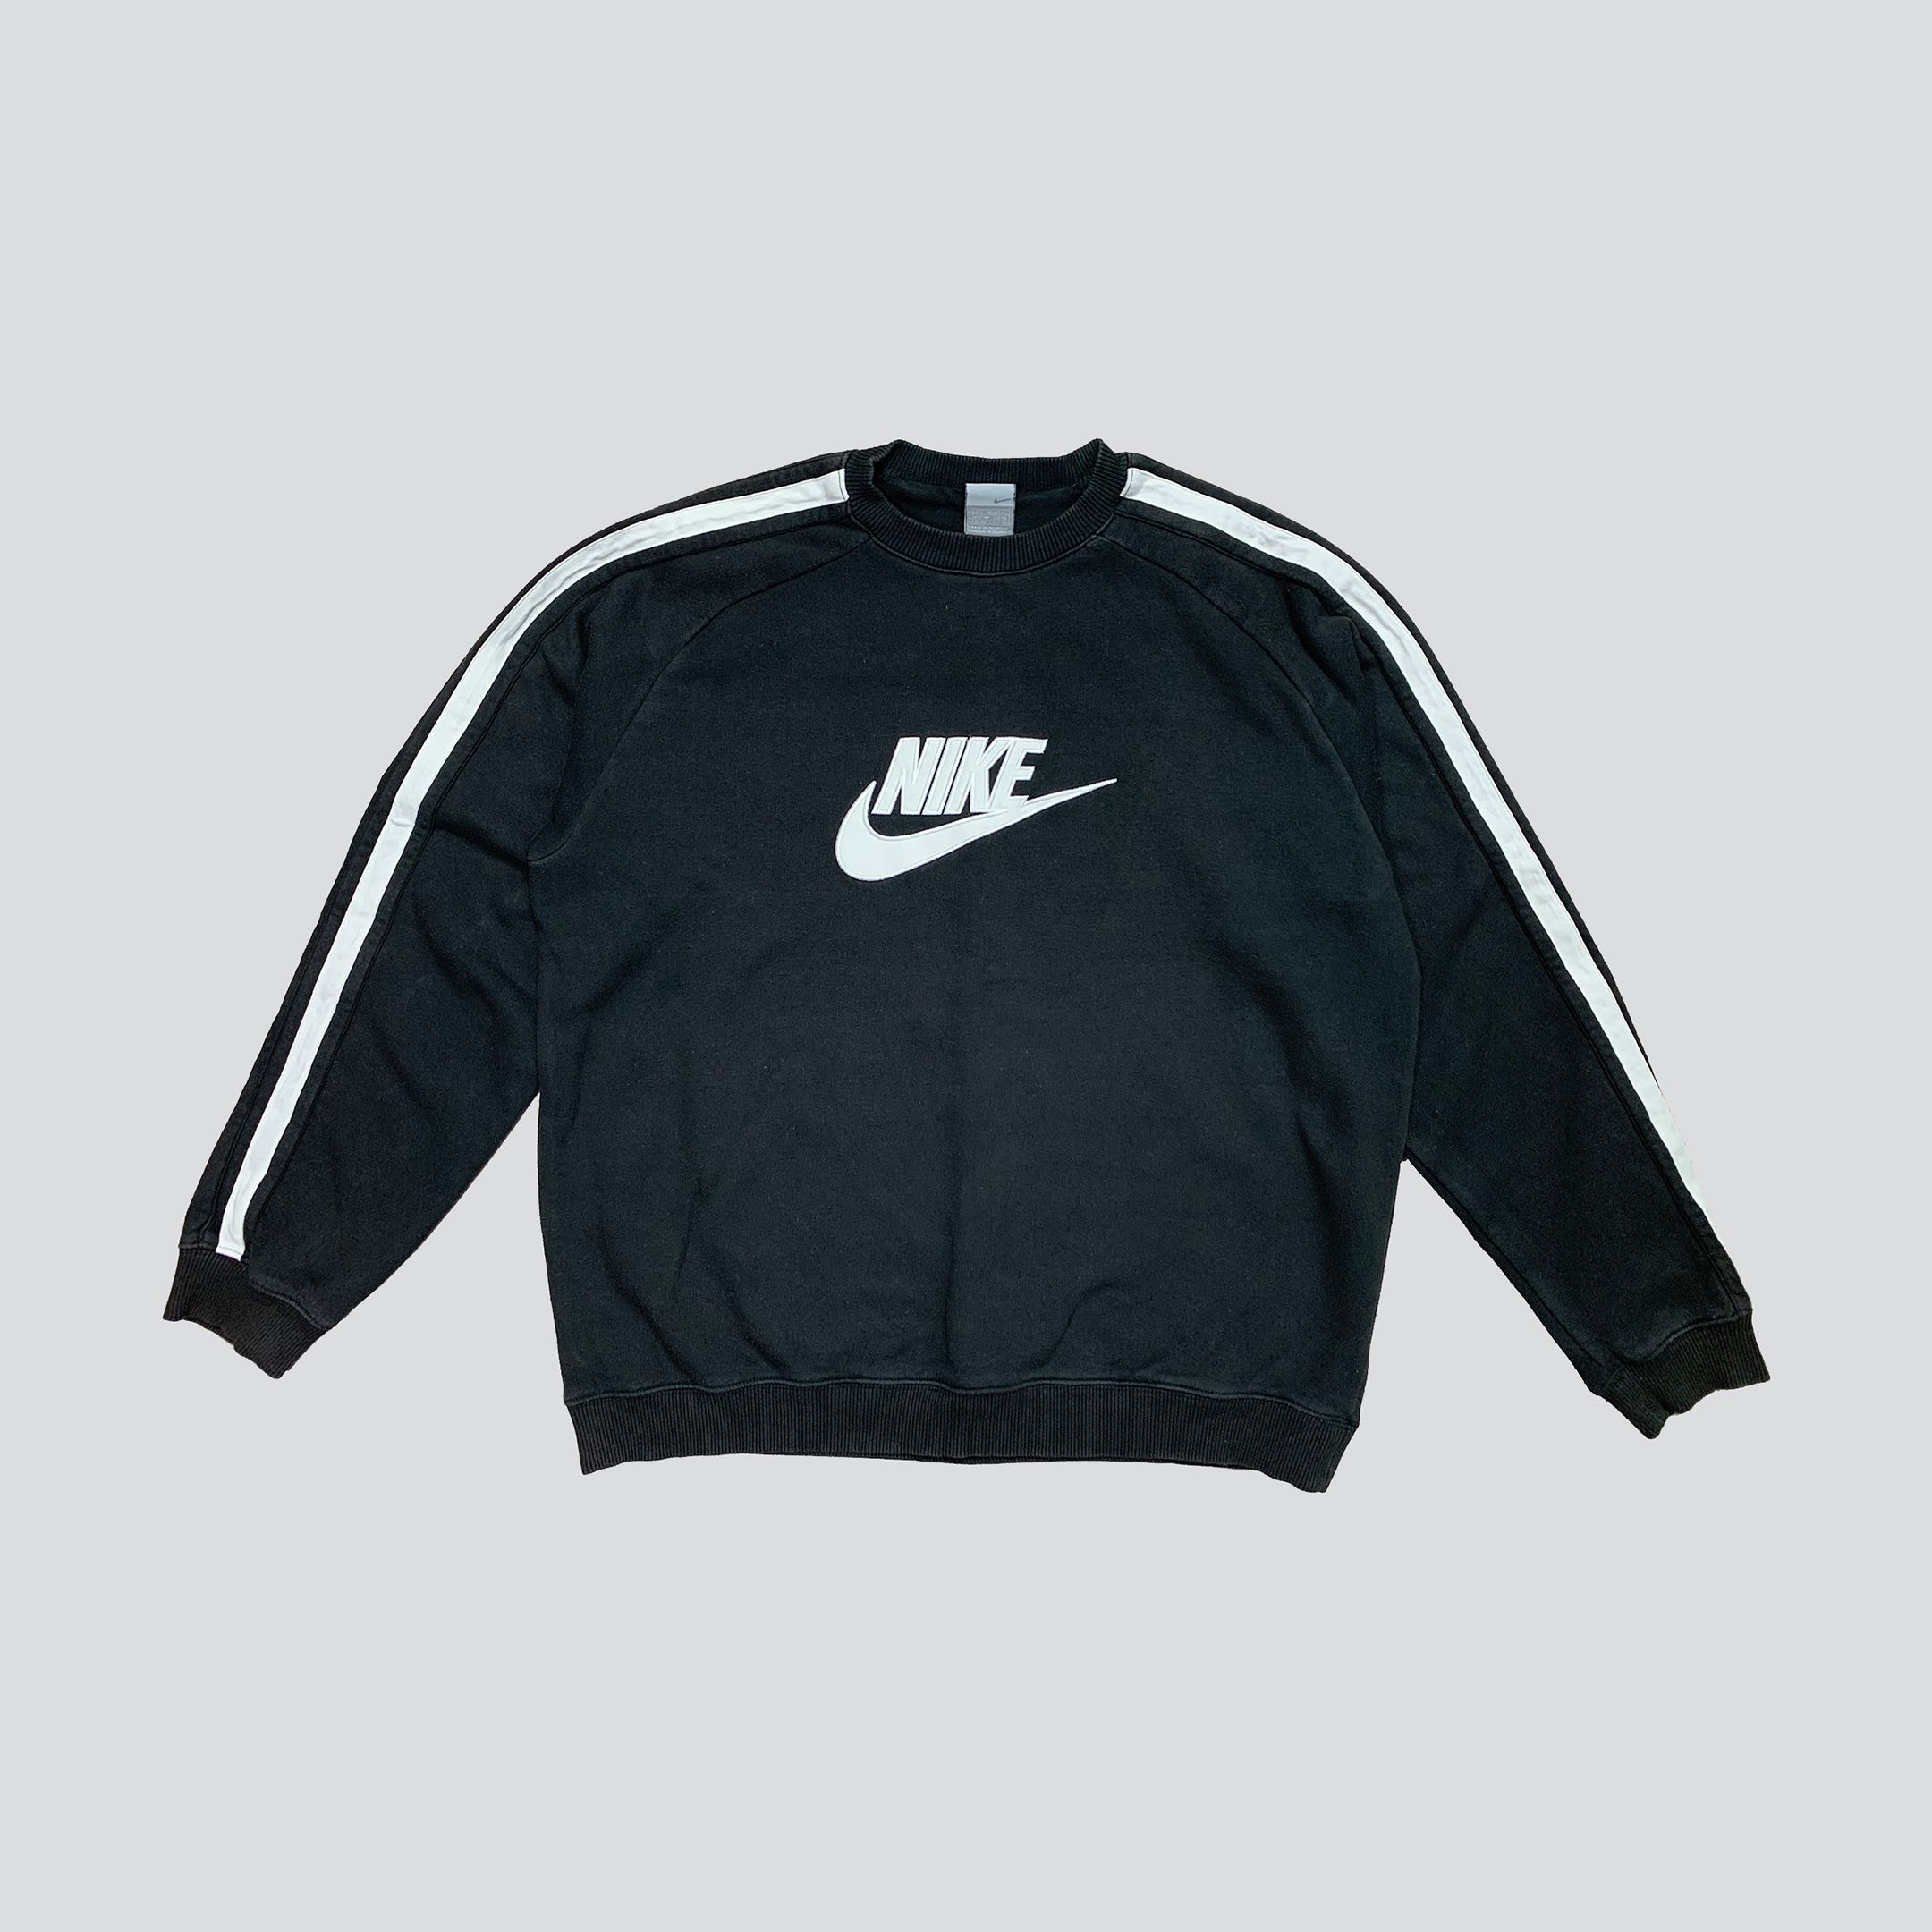 Vintage Nike Sweatshirt Size L 90s Nike Sweatshirt Men Sweatshirt Women Sweatshirt Oversize Sweatshirt Y2K Nike Sweatshirt - 1